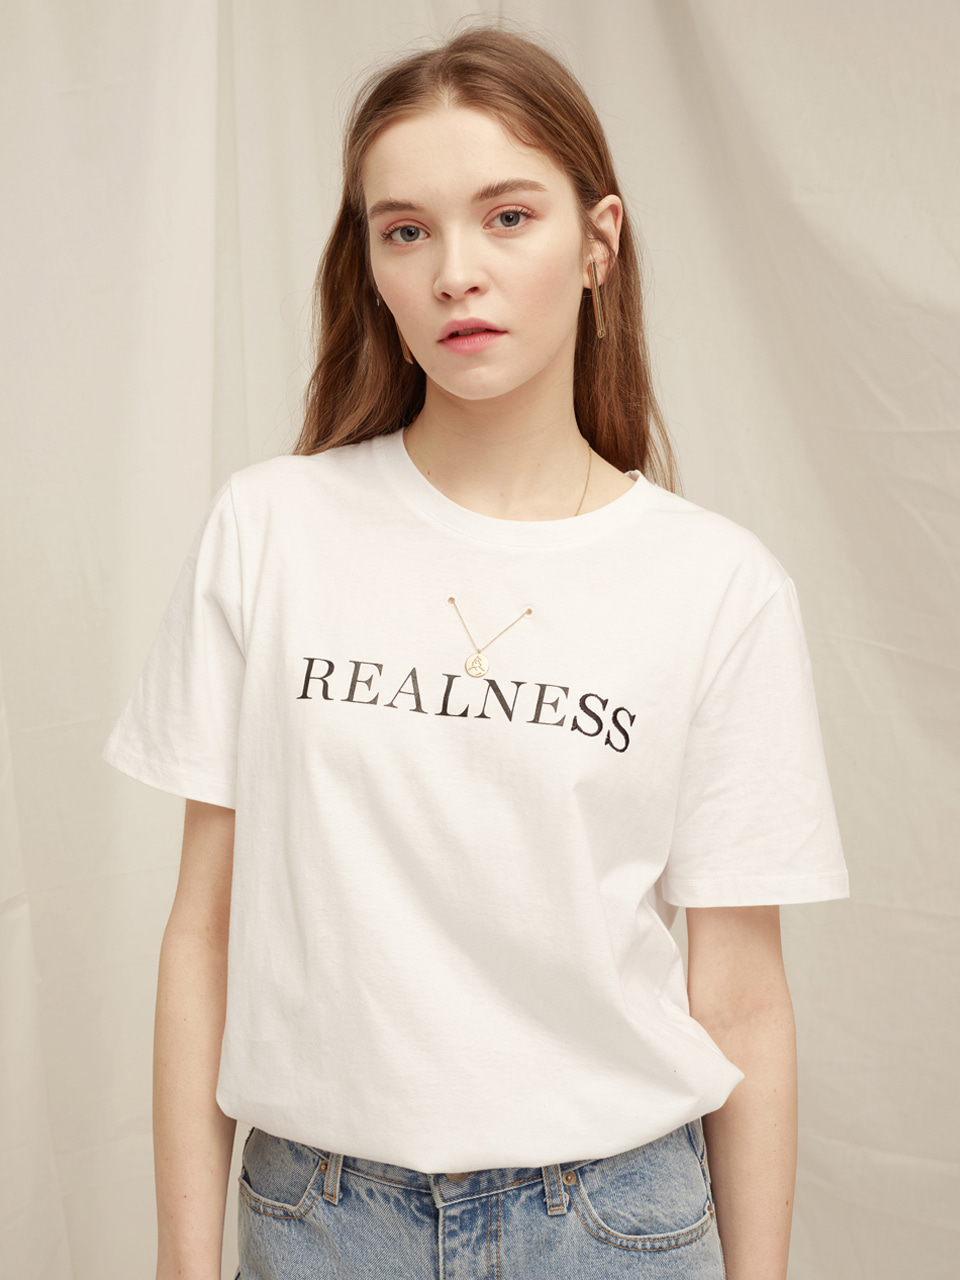 Realness T - White